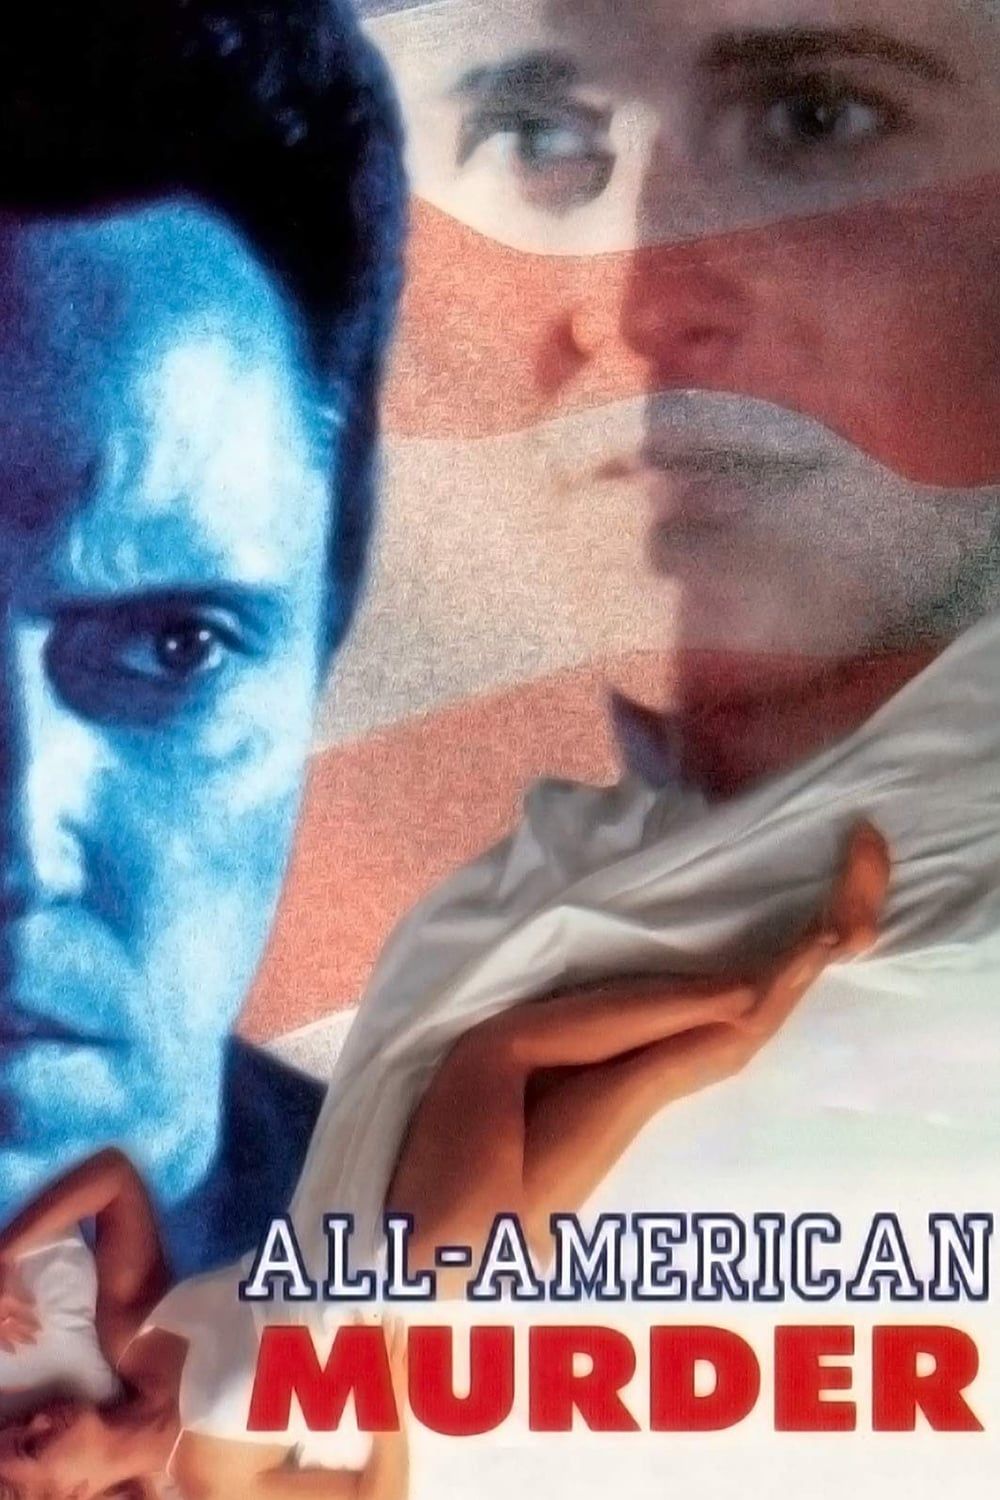 All-American Murder Film Poster